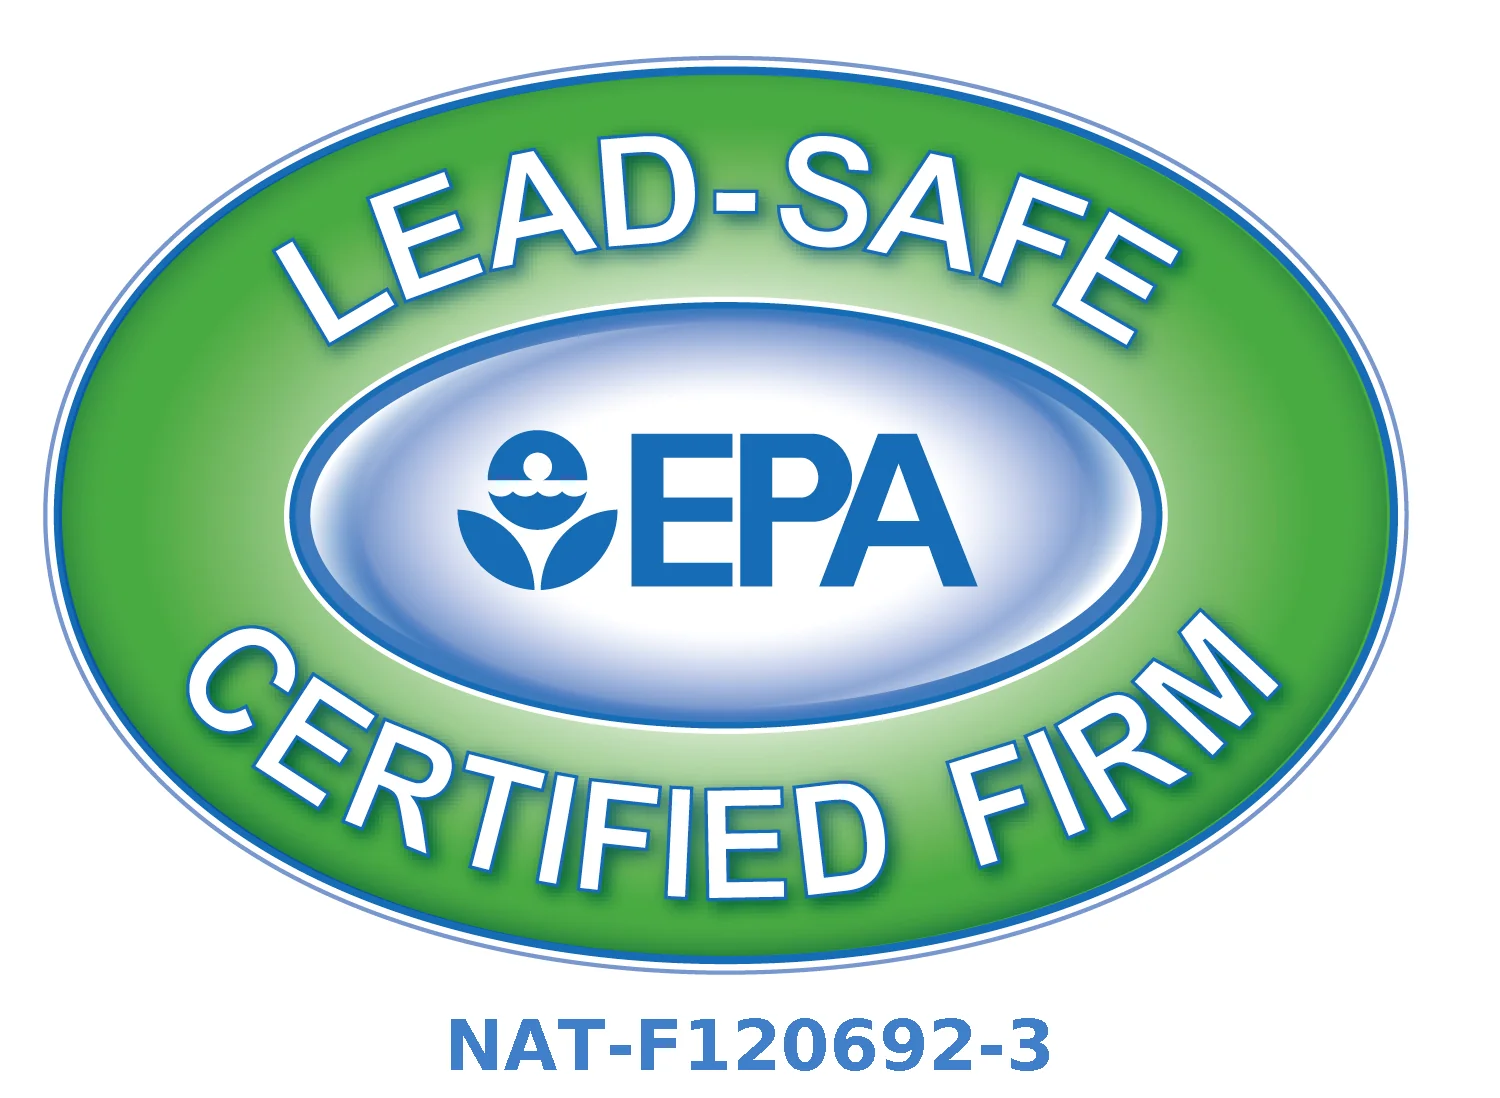 EPA Lead-Safe Certified Firm badge